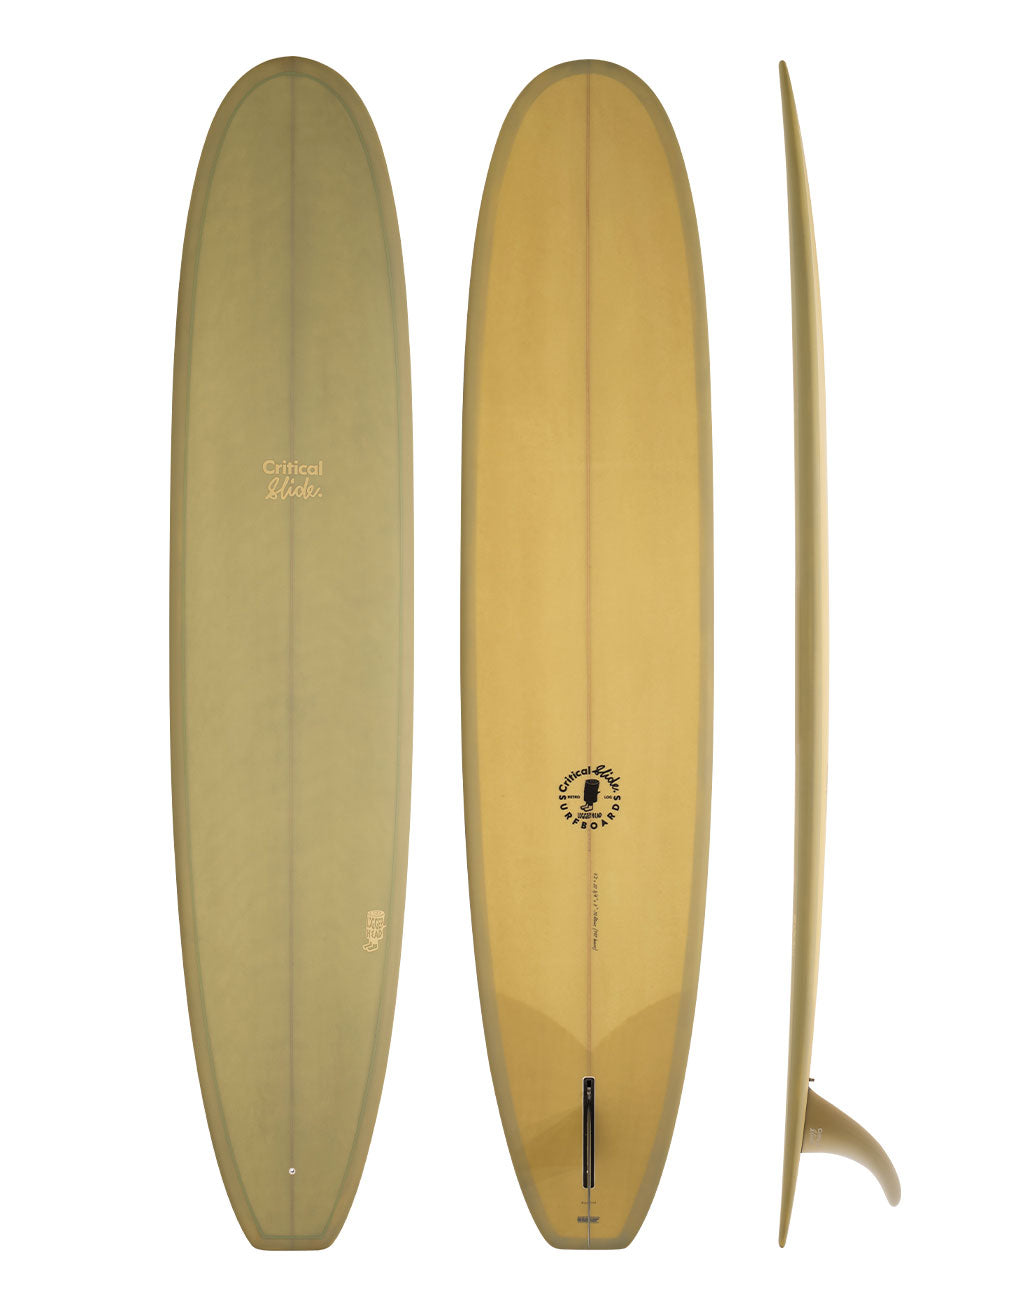 The Critical Slide Society Surfboards - Logger Head - kiwi green coloured longboard